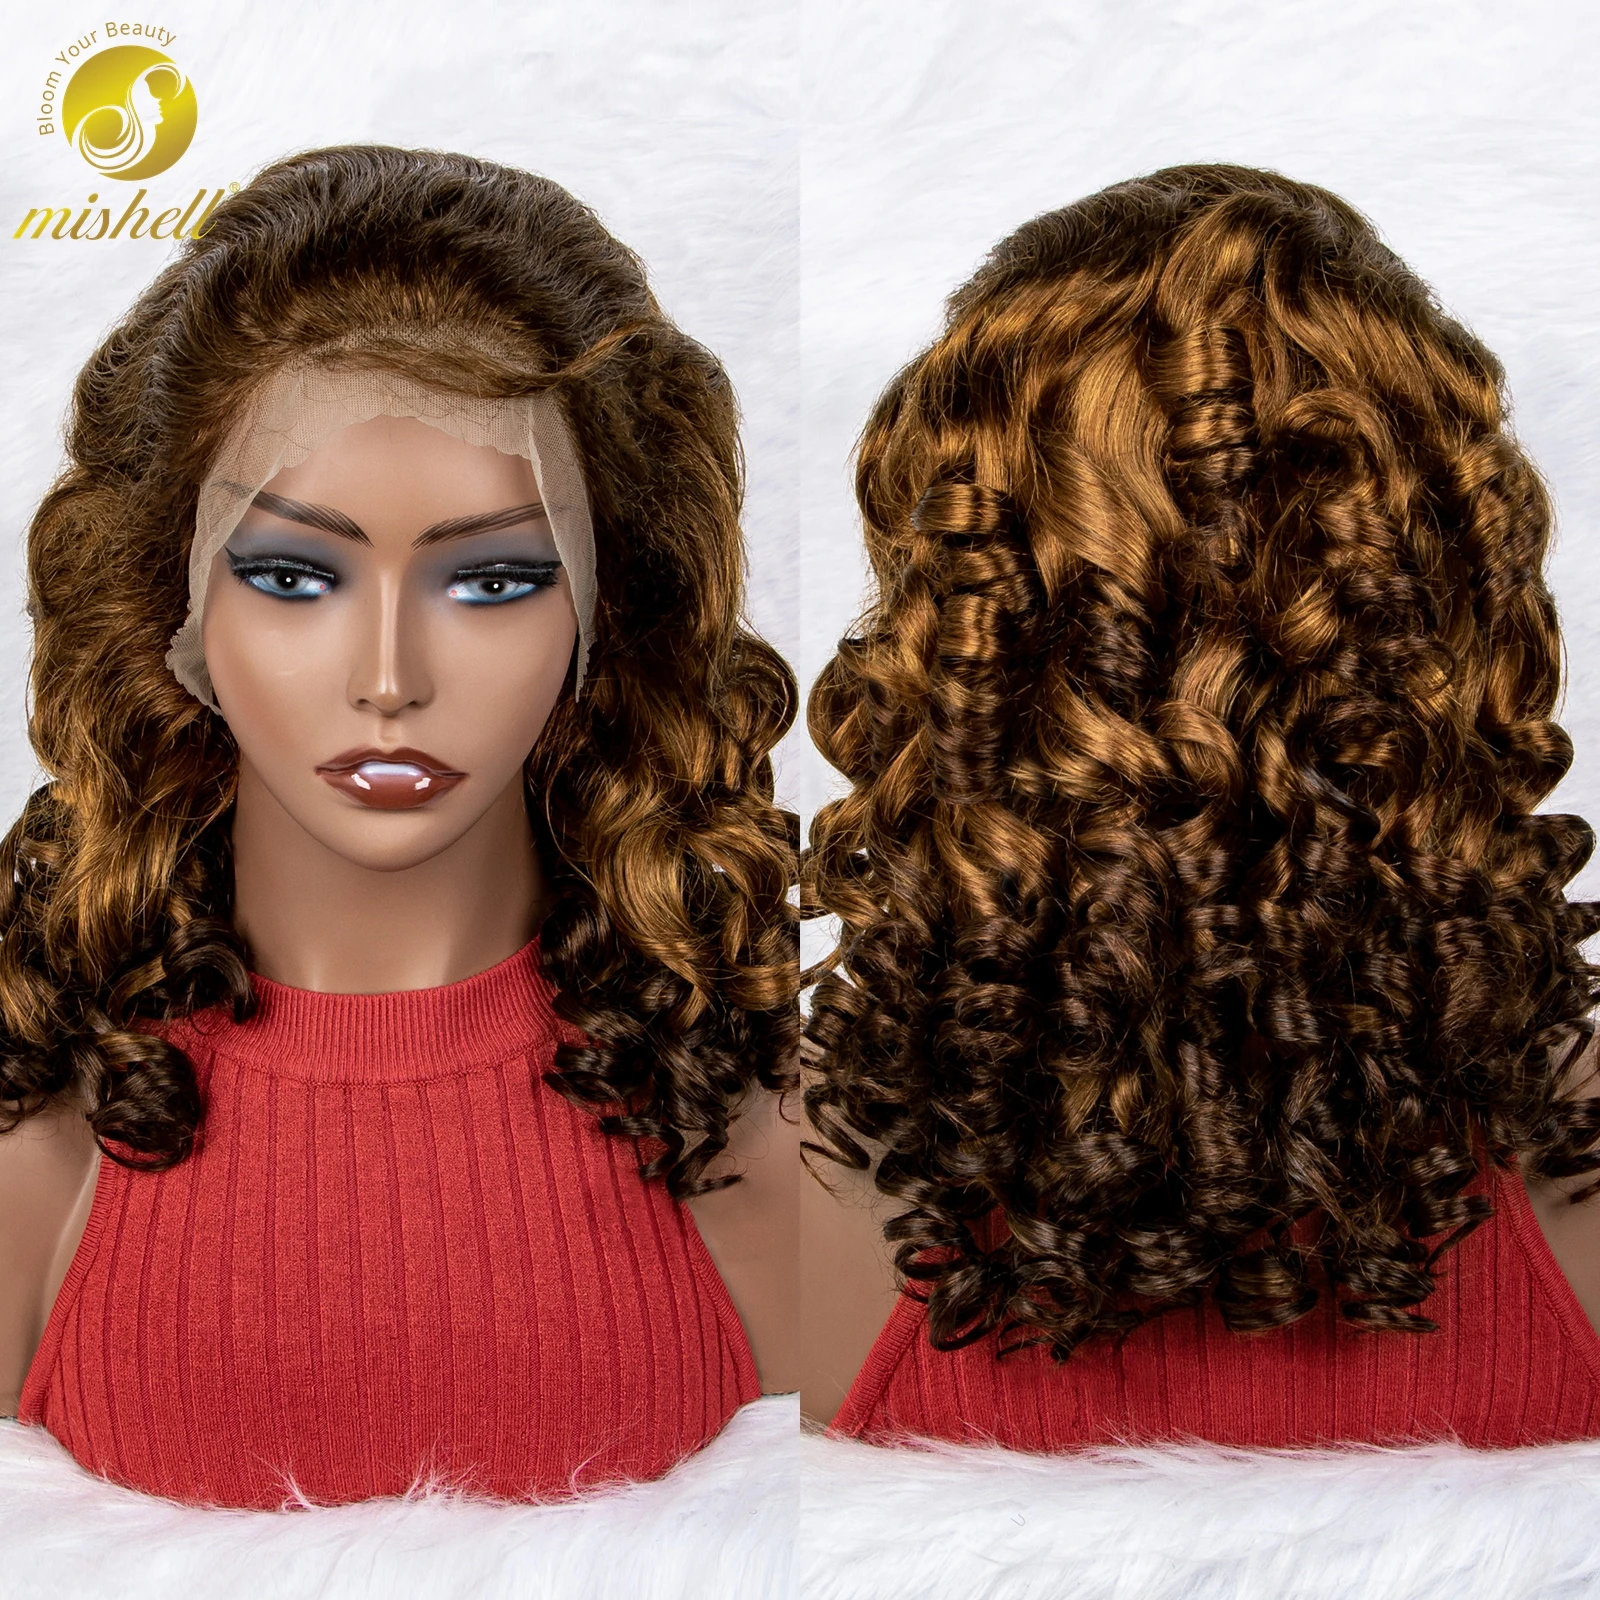 Mishel-Wavy Lace Front Peruca de cabelo humano para mulheres, pré arrancada com cabelo de bebê, onda solta colorida, cabelo remy brasileiro, 13x4